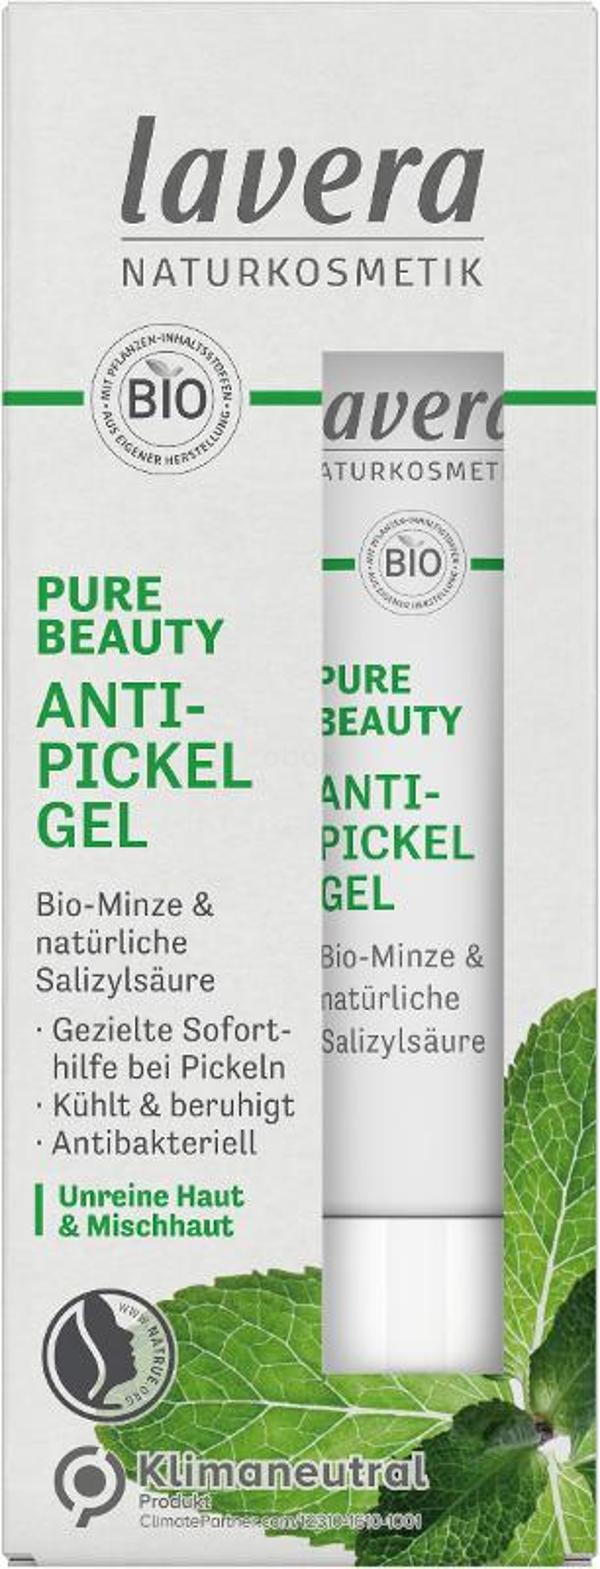 Produktfoto zu Anti-Pickel Gel, 15 ml